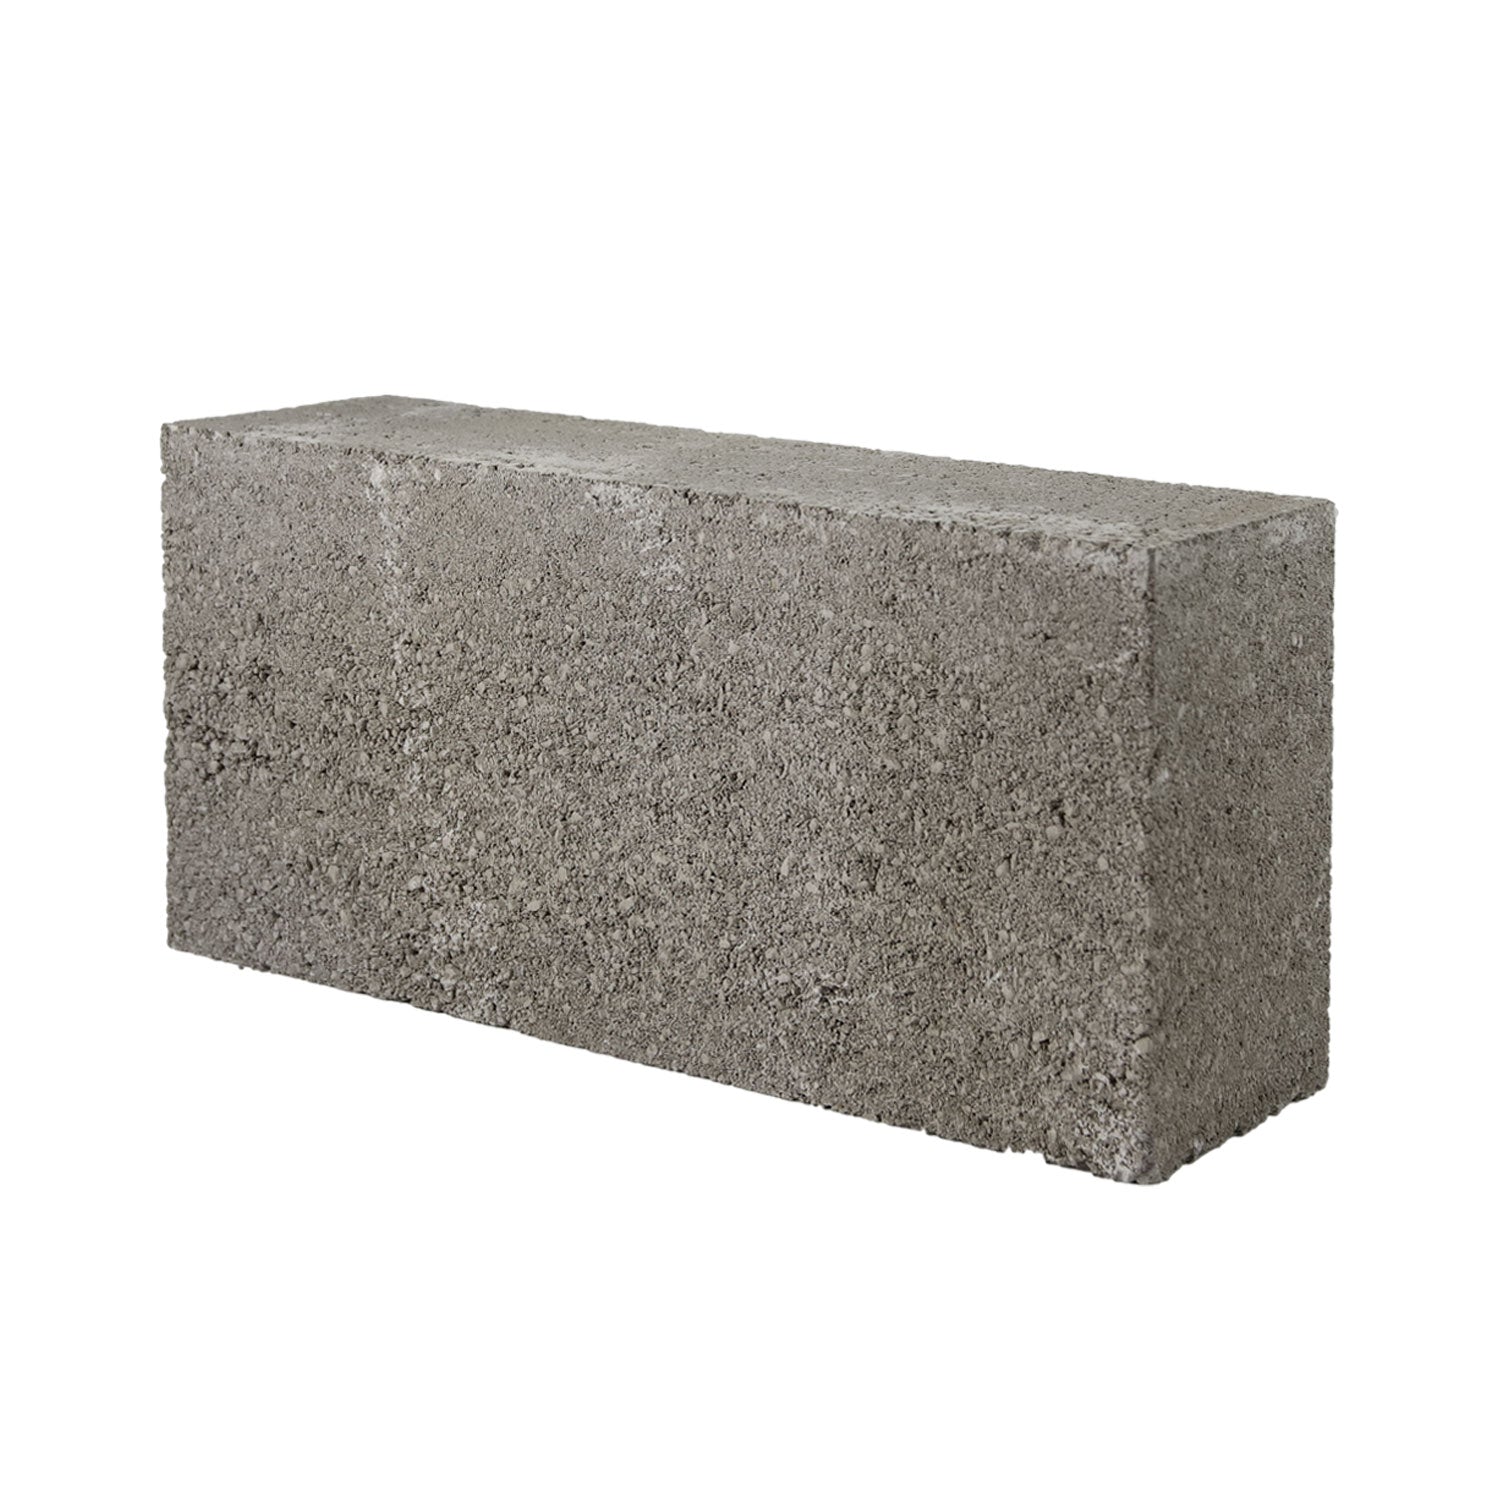 Concrete Block 140mm